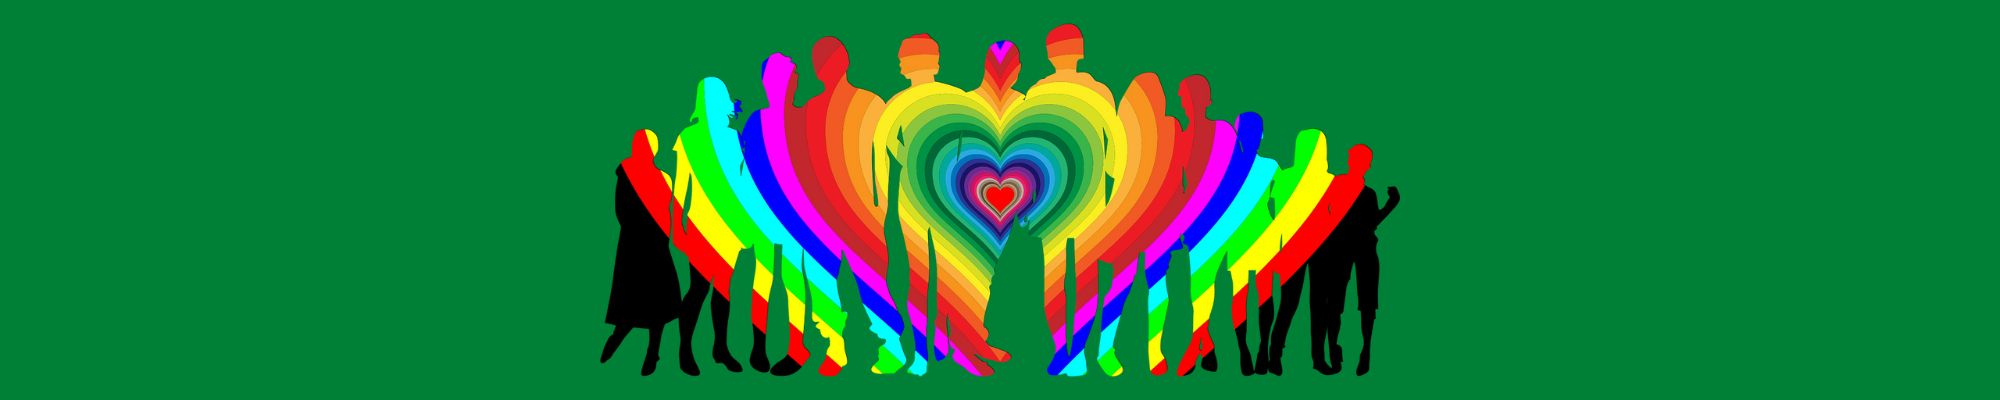 Rainbow Heart People Silhouette